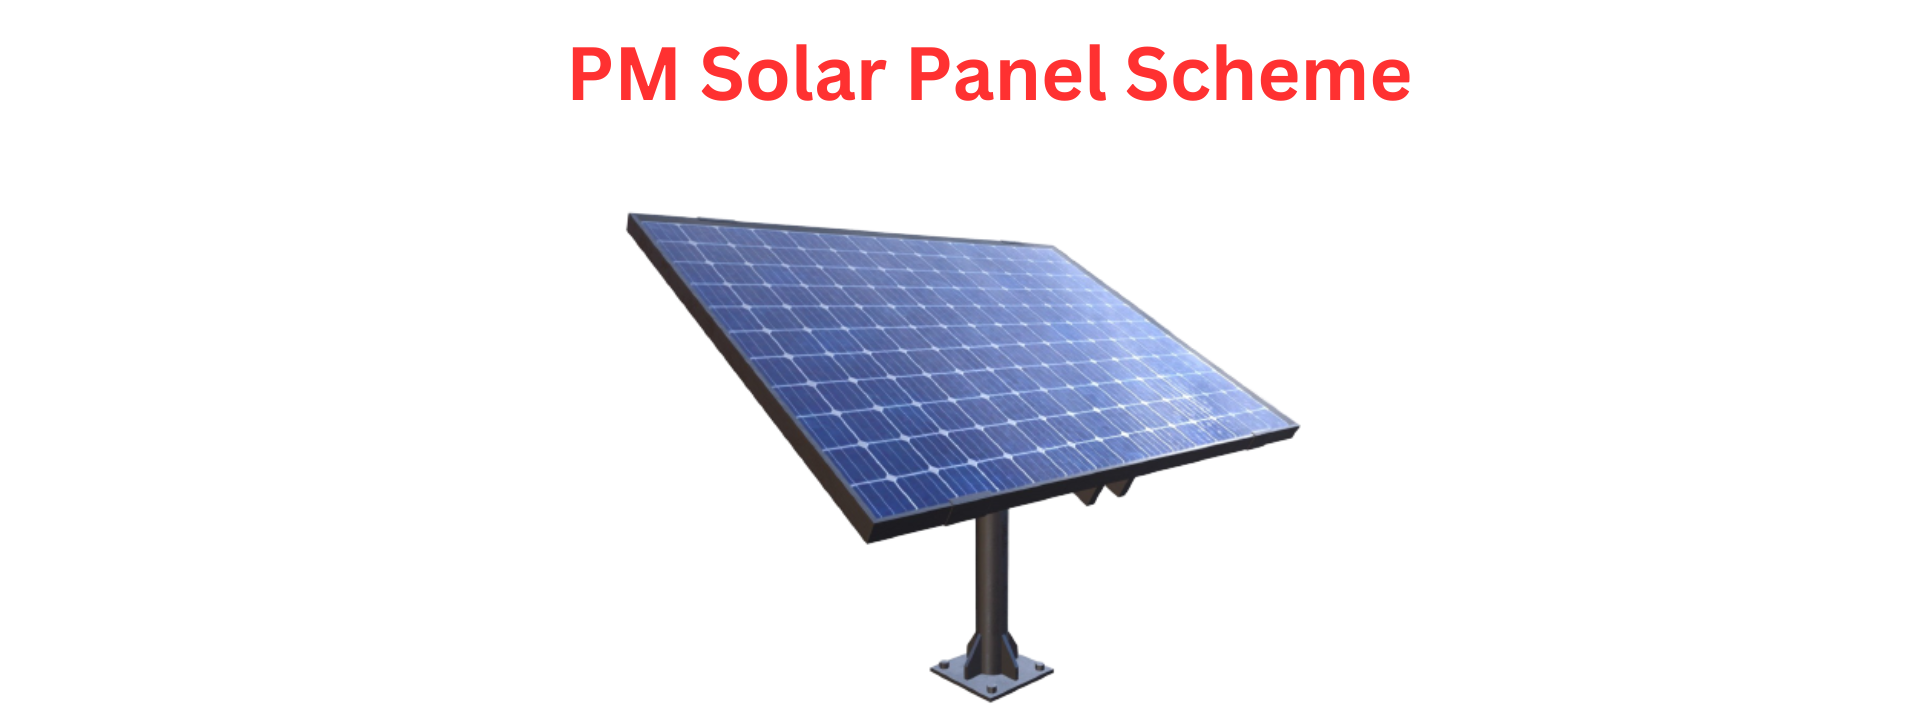 PM Solar Panel Scheme